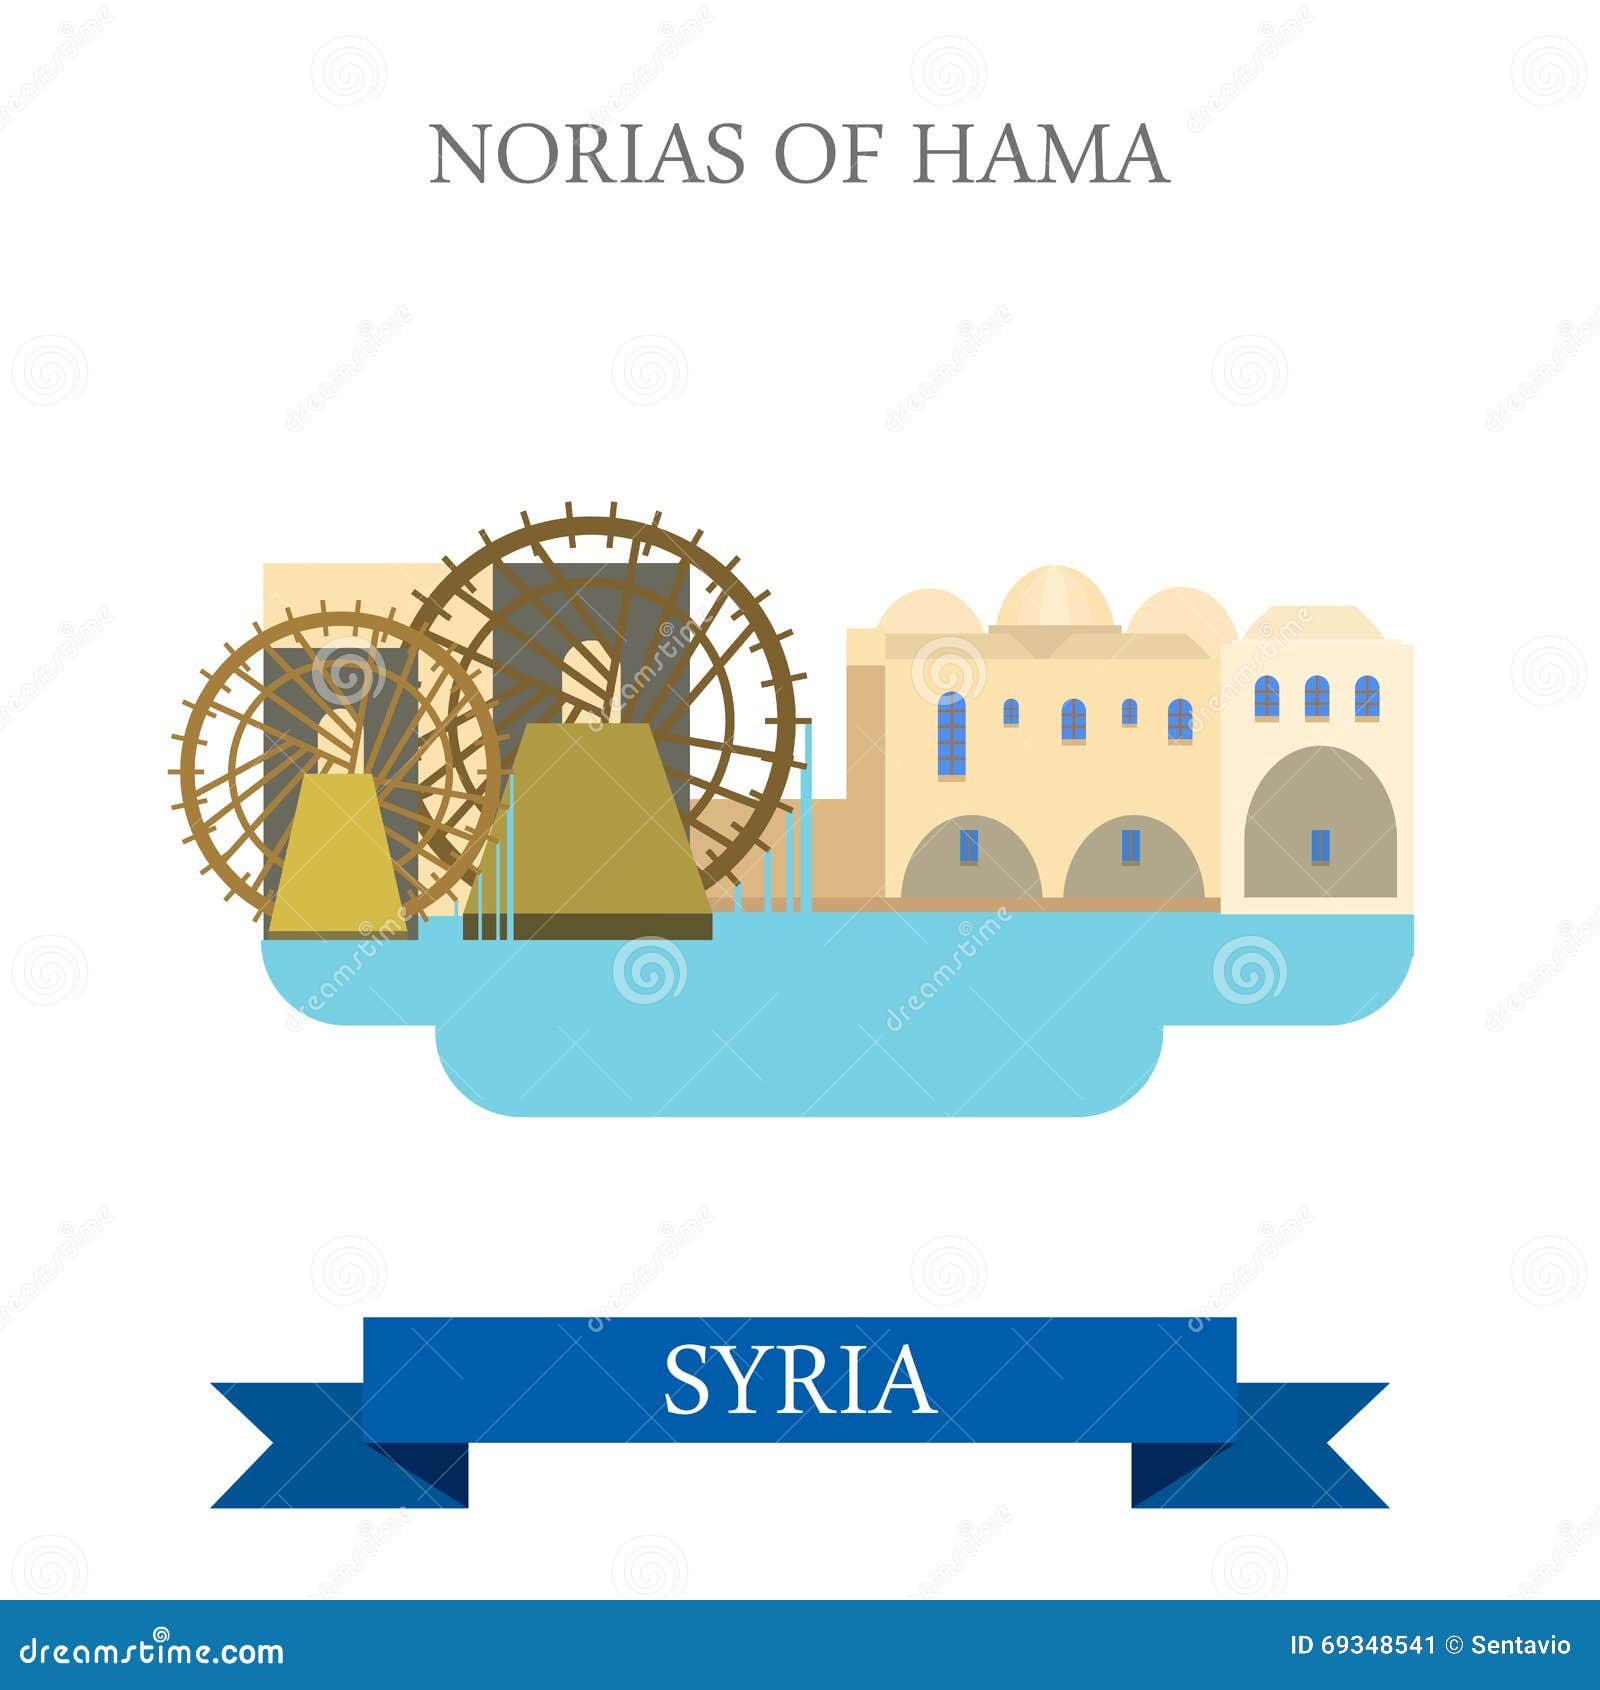 norias of hama syria  flat attraction travel sightseeing